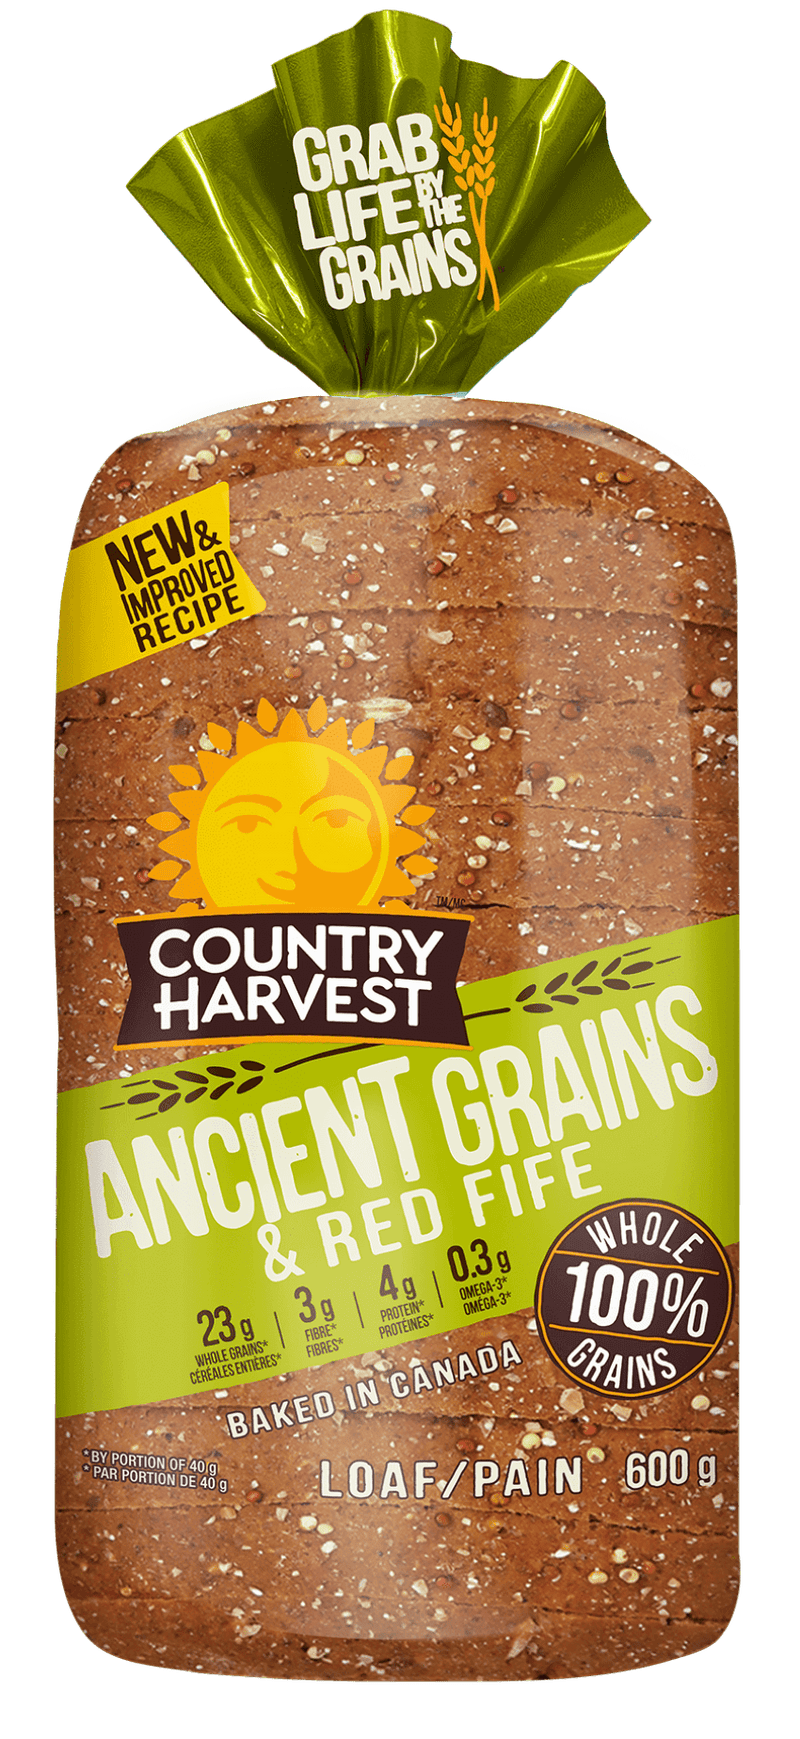 Crountry Harvest Ancient Grain